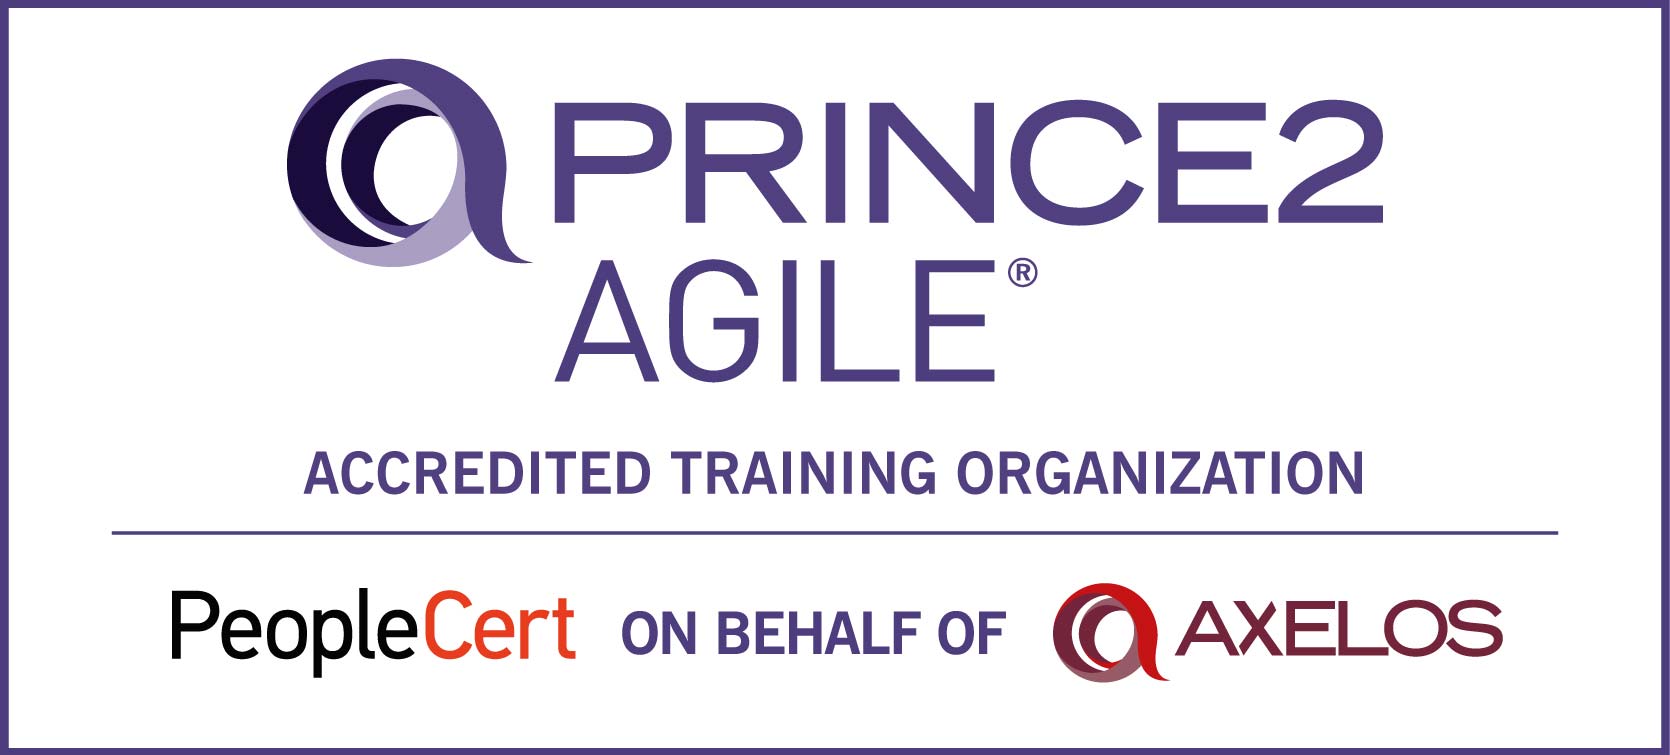 PRINCE2 Agile® Downloads